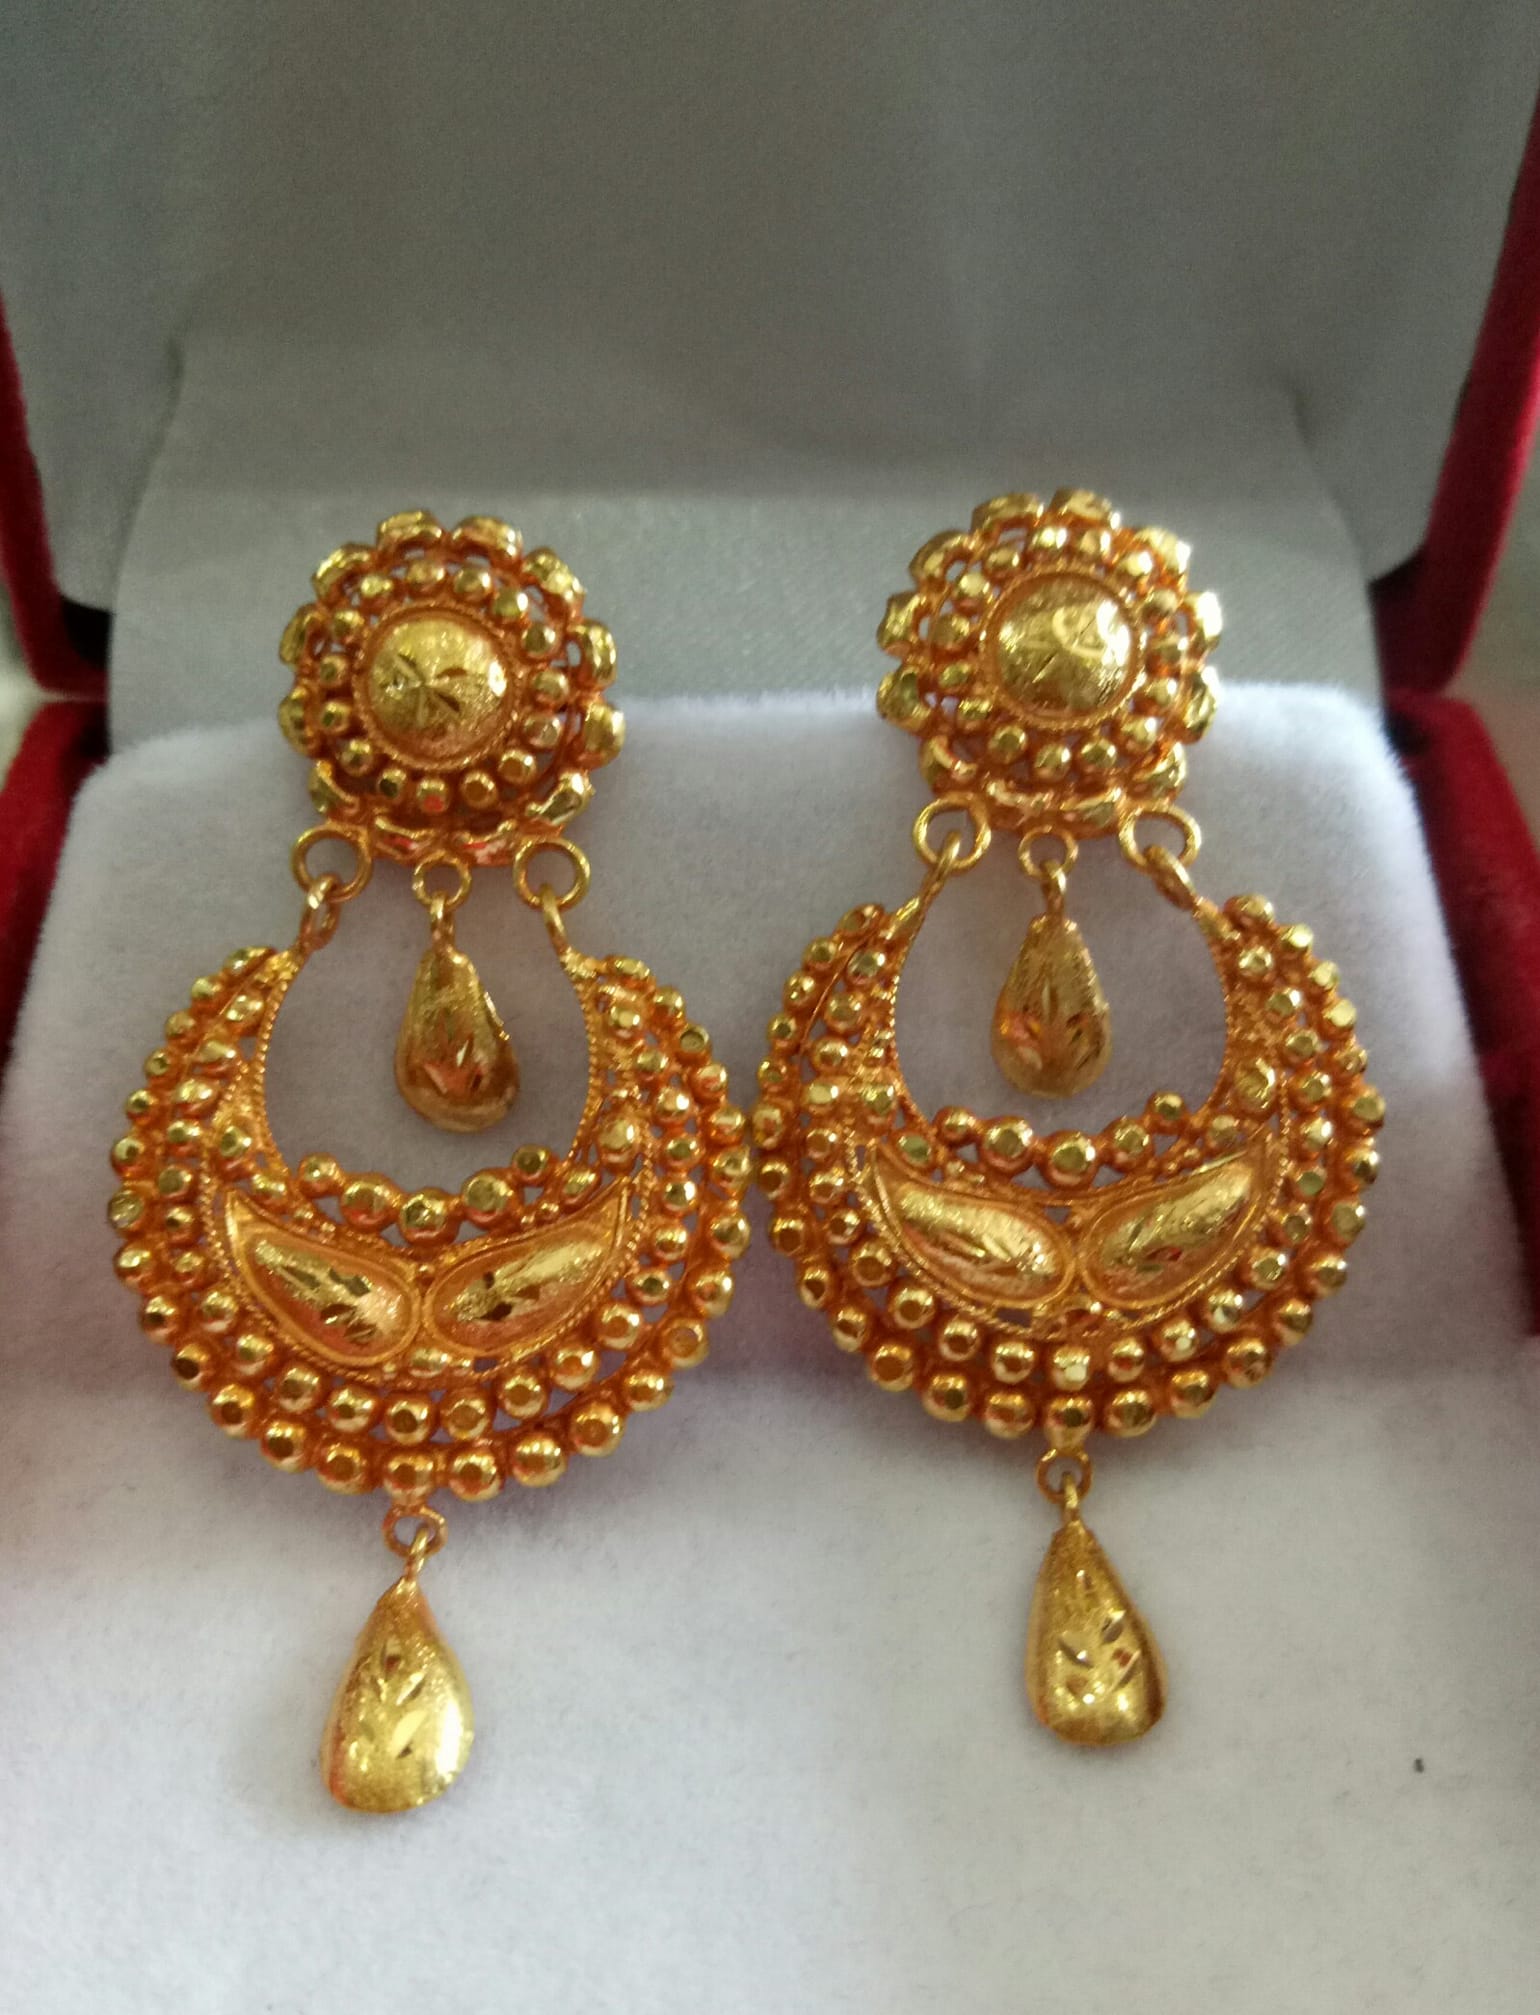 Shubha Laxmi Jewellers, Milan chowk, Maitri-path, Siddharthanagar ...